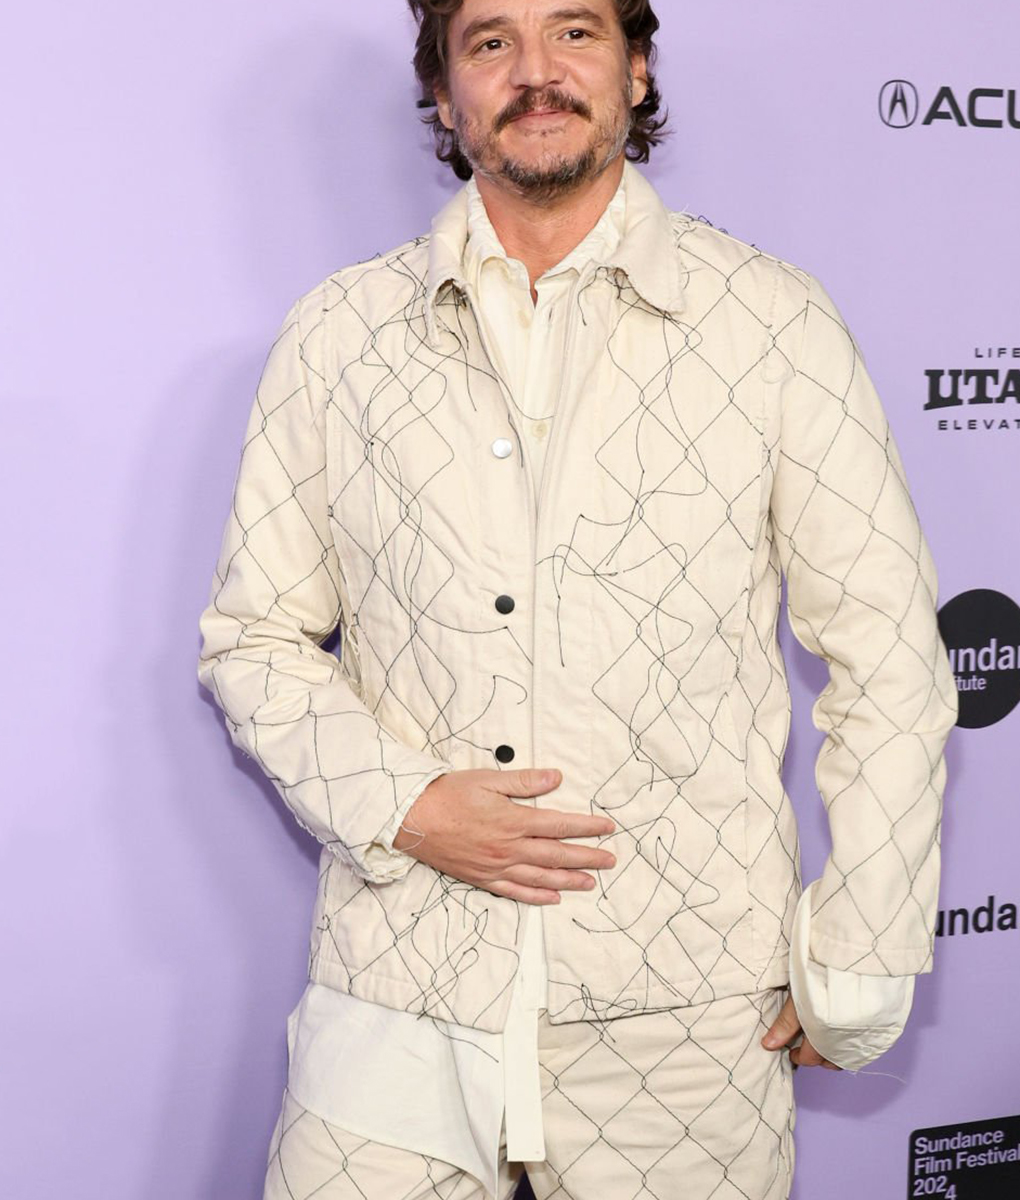 Pedro Pascal Sundance Film Festival Suit (1)